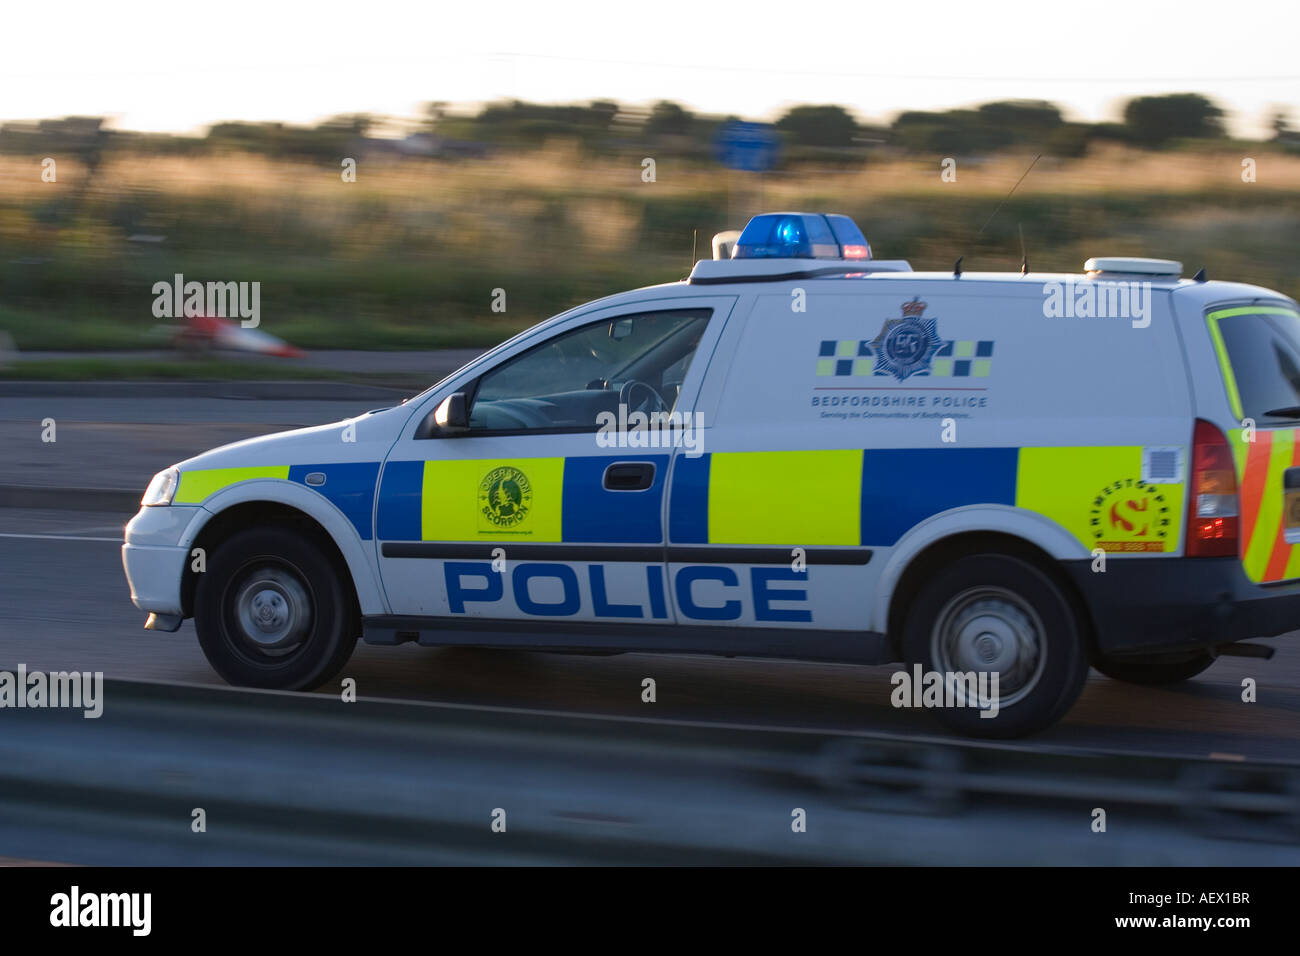 Police Car / Van in action Stock Photo